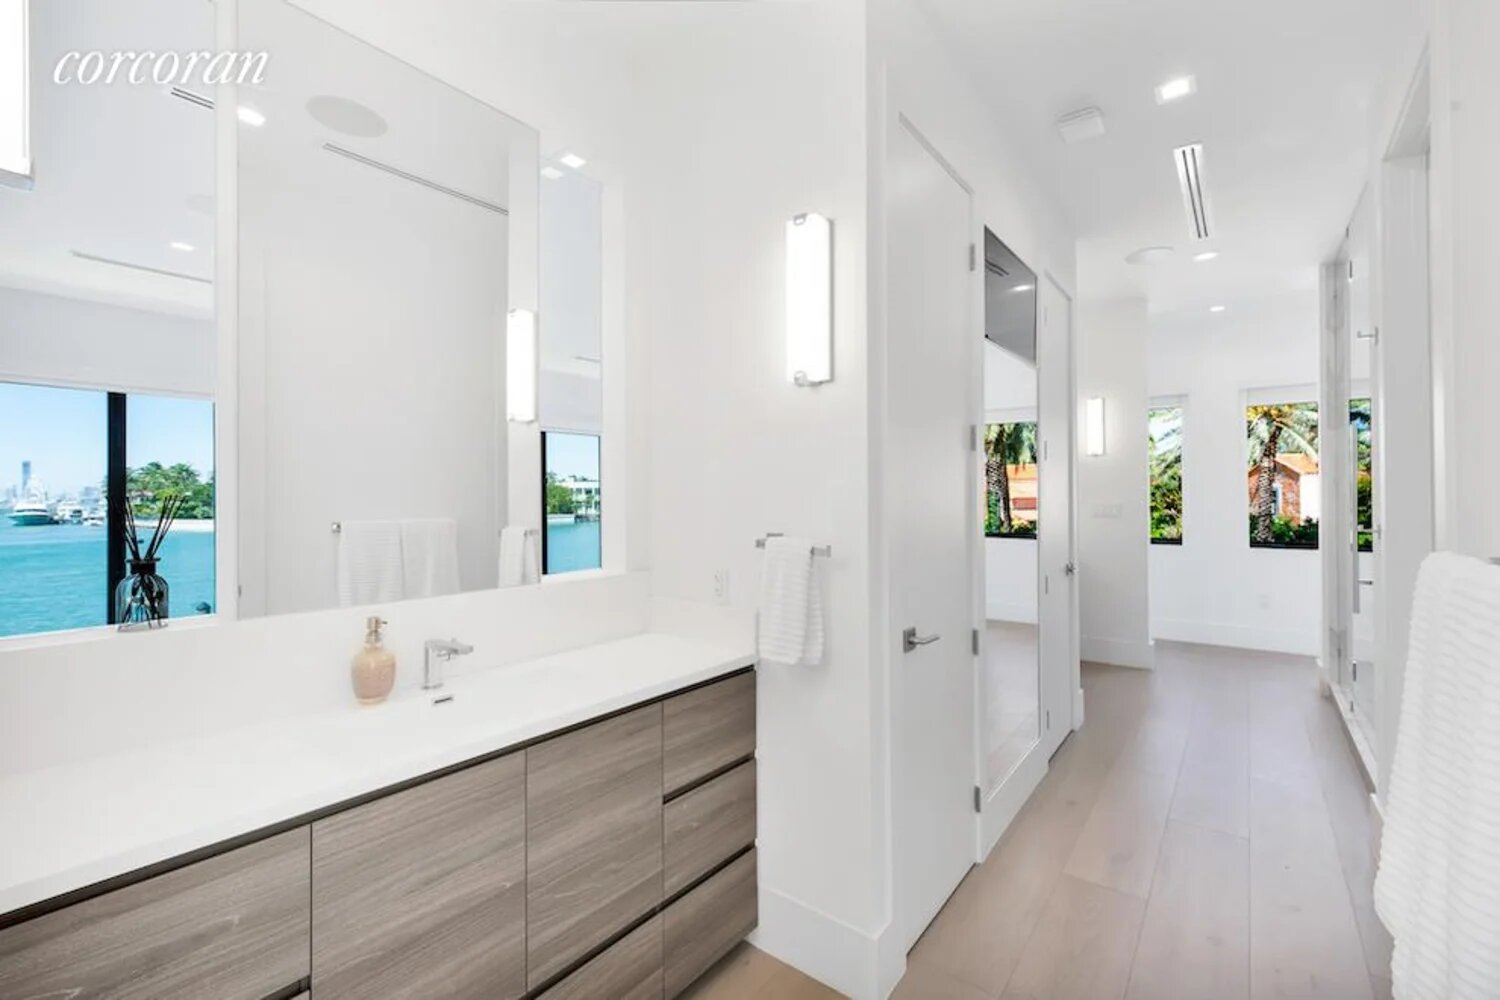 Casa Jennifer Lopez y Ben Affleck en Miami baño